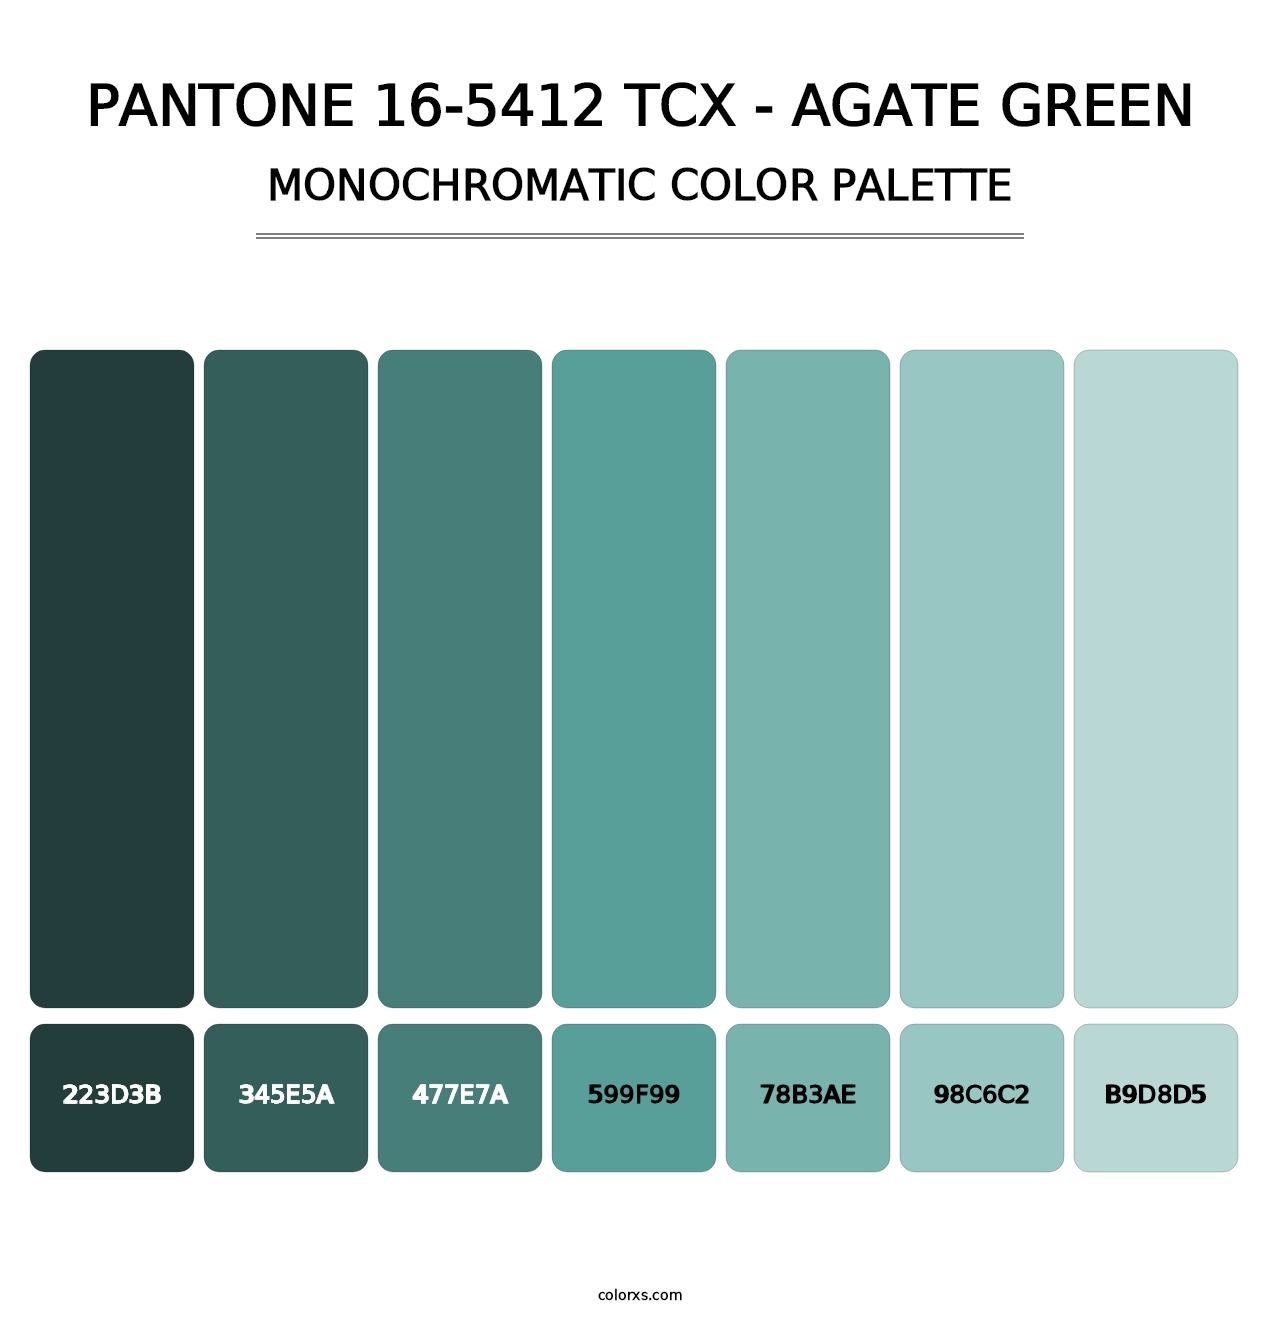 PANTONE 16-5412 TCX - Agate Green - Monochromatic Color Palette